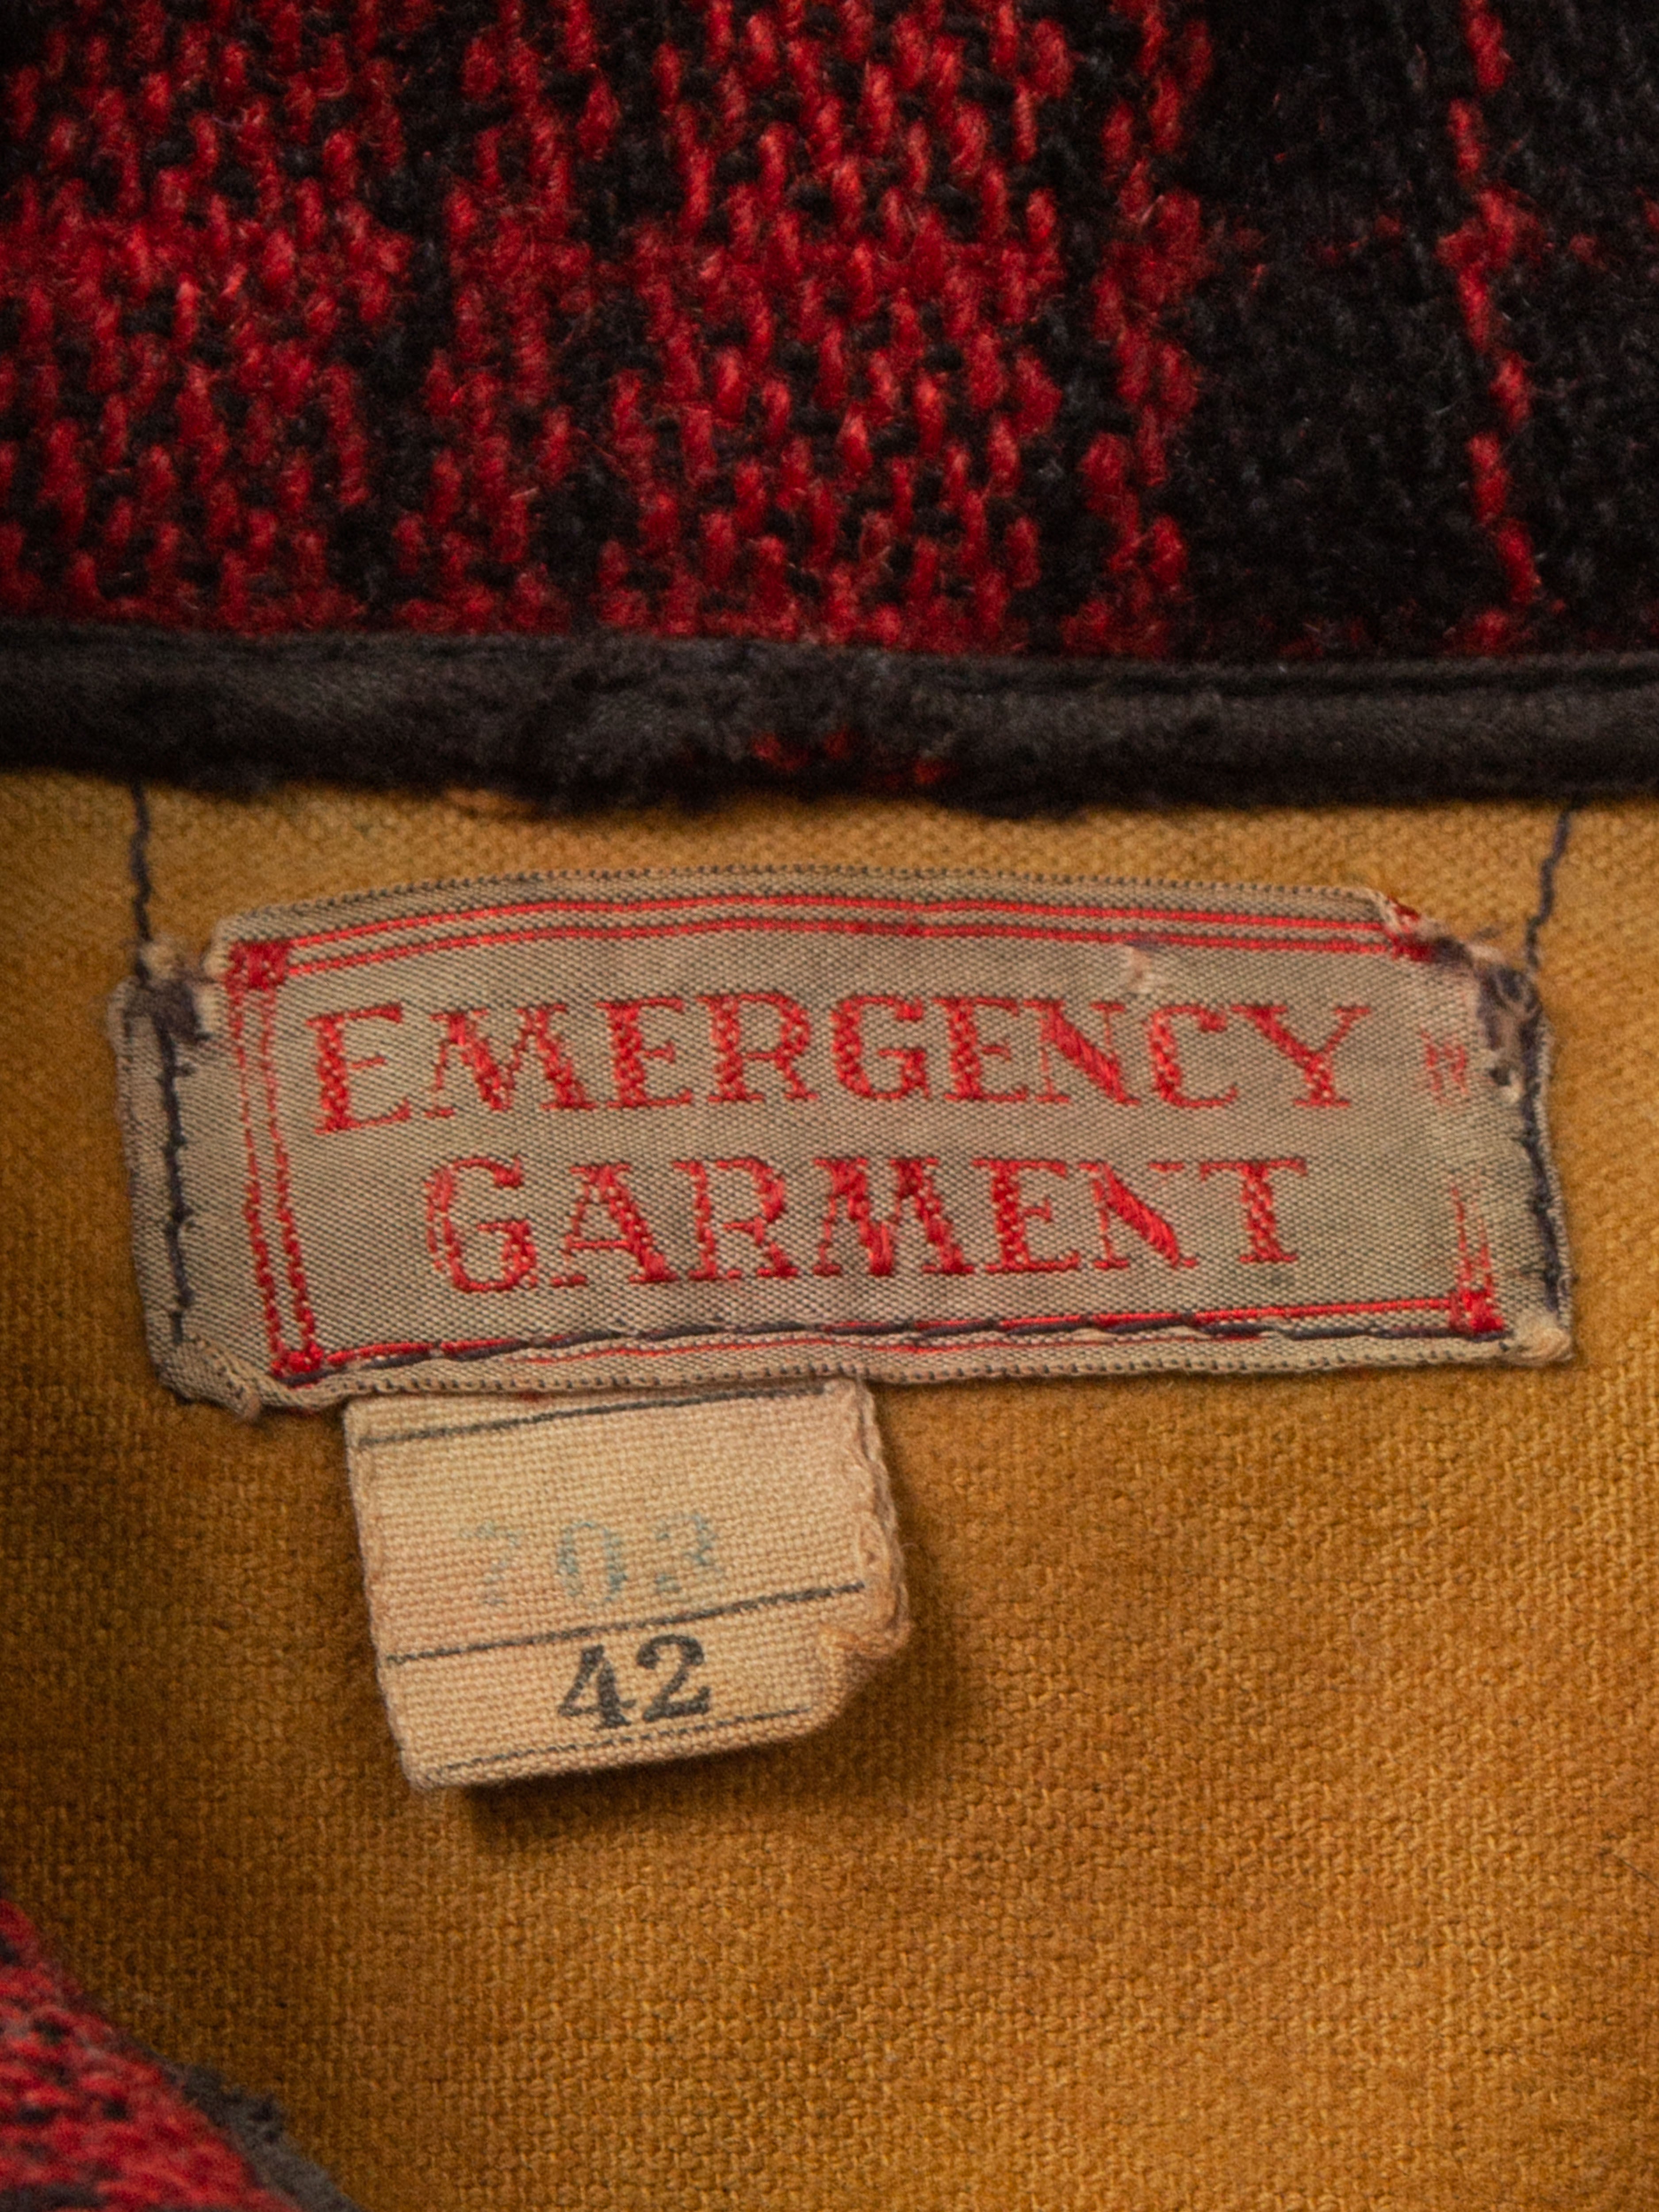 EMERGENCY GARMENT 40s JACKET